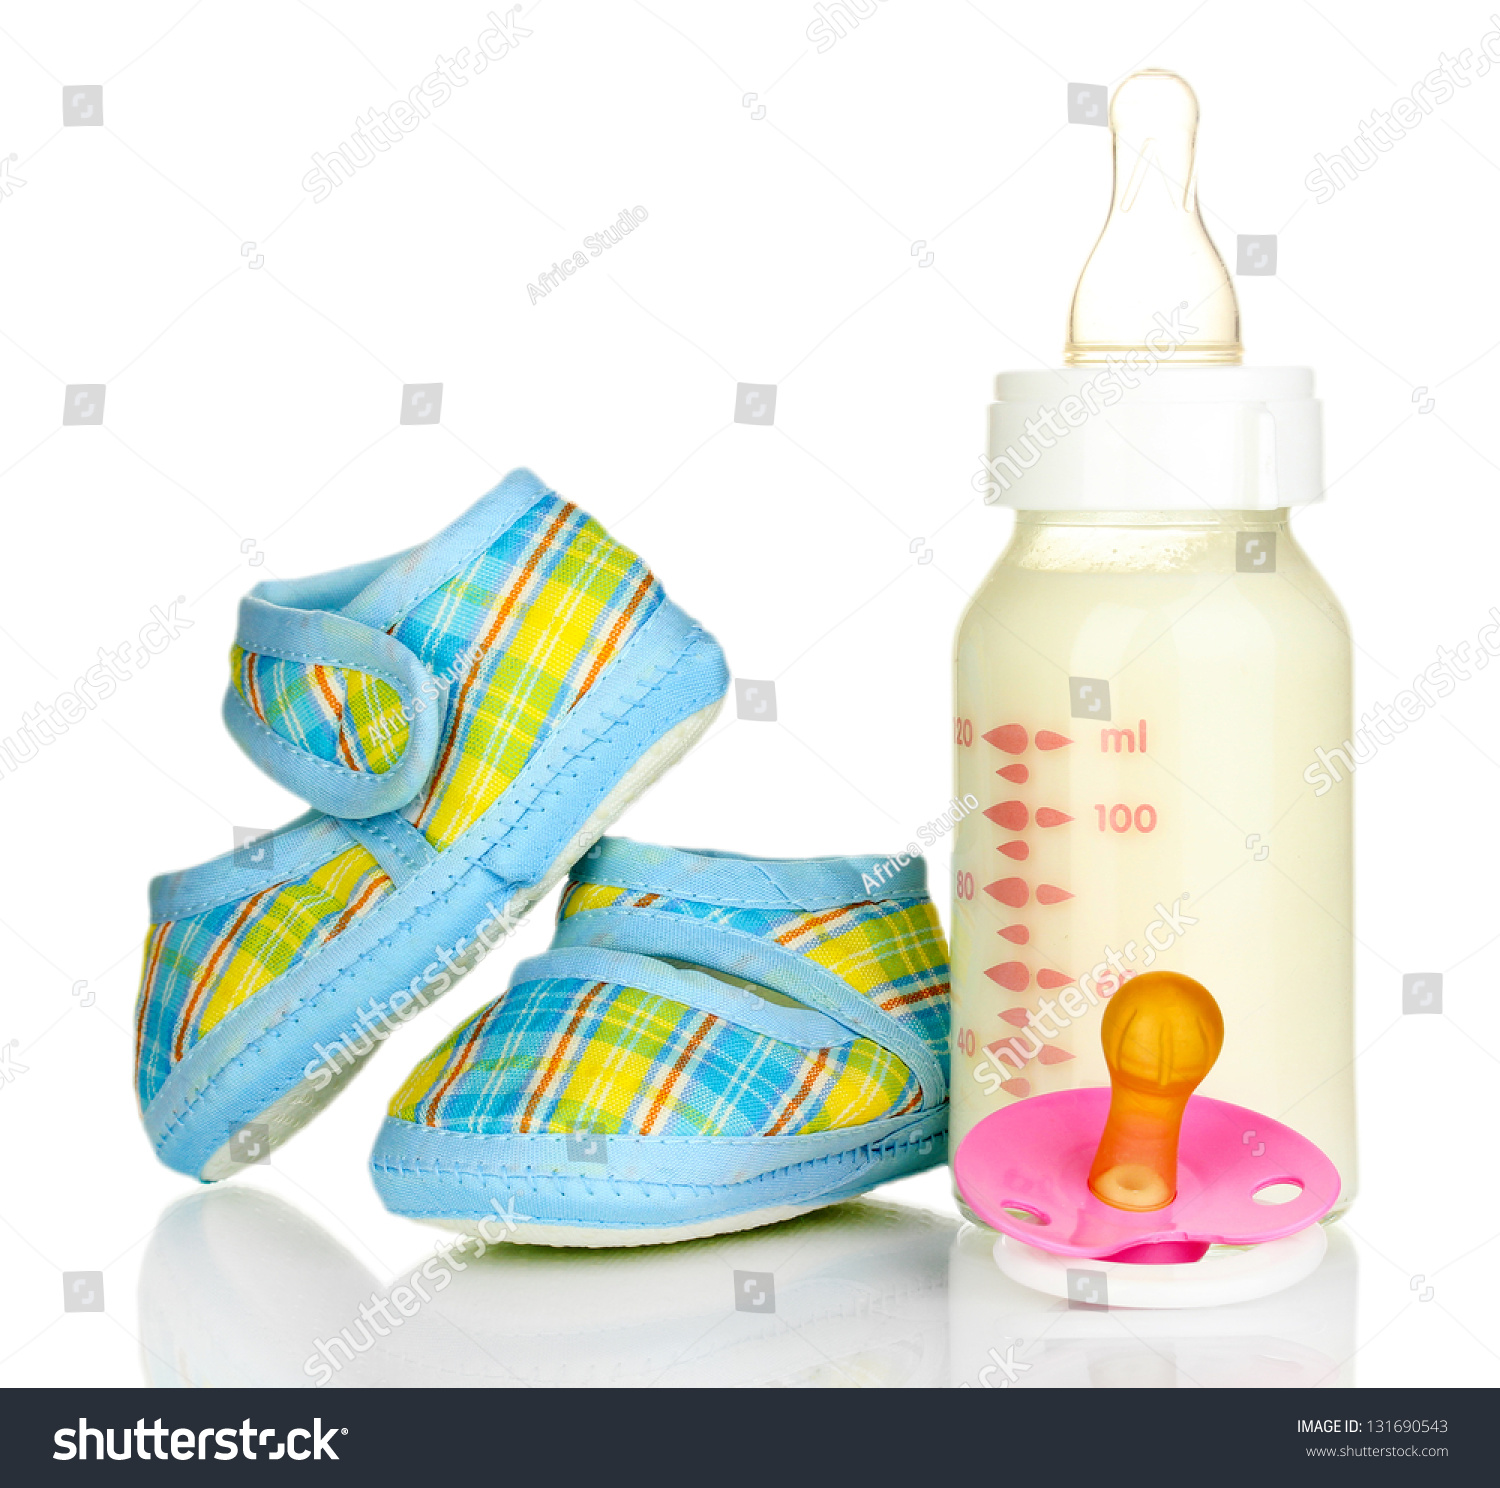 Baby Bottle Of Milk Isolated On White Stock Photo 131690543 : Shutterstock